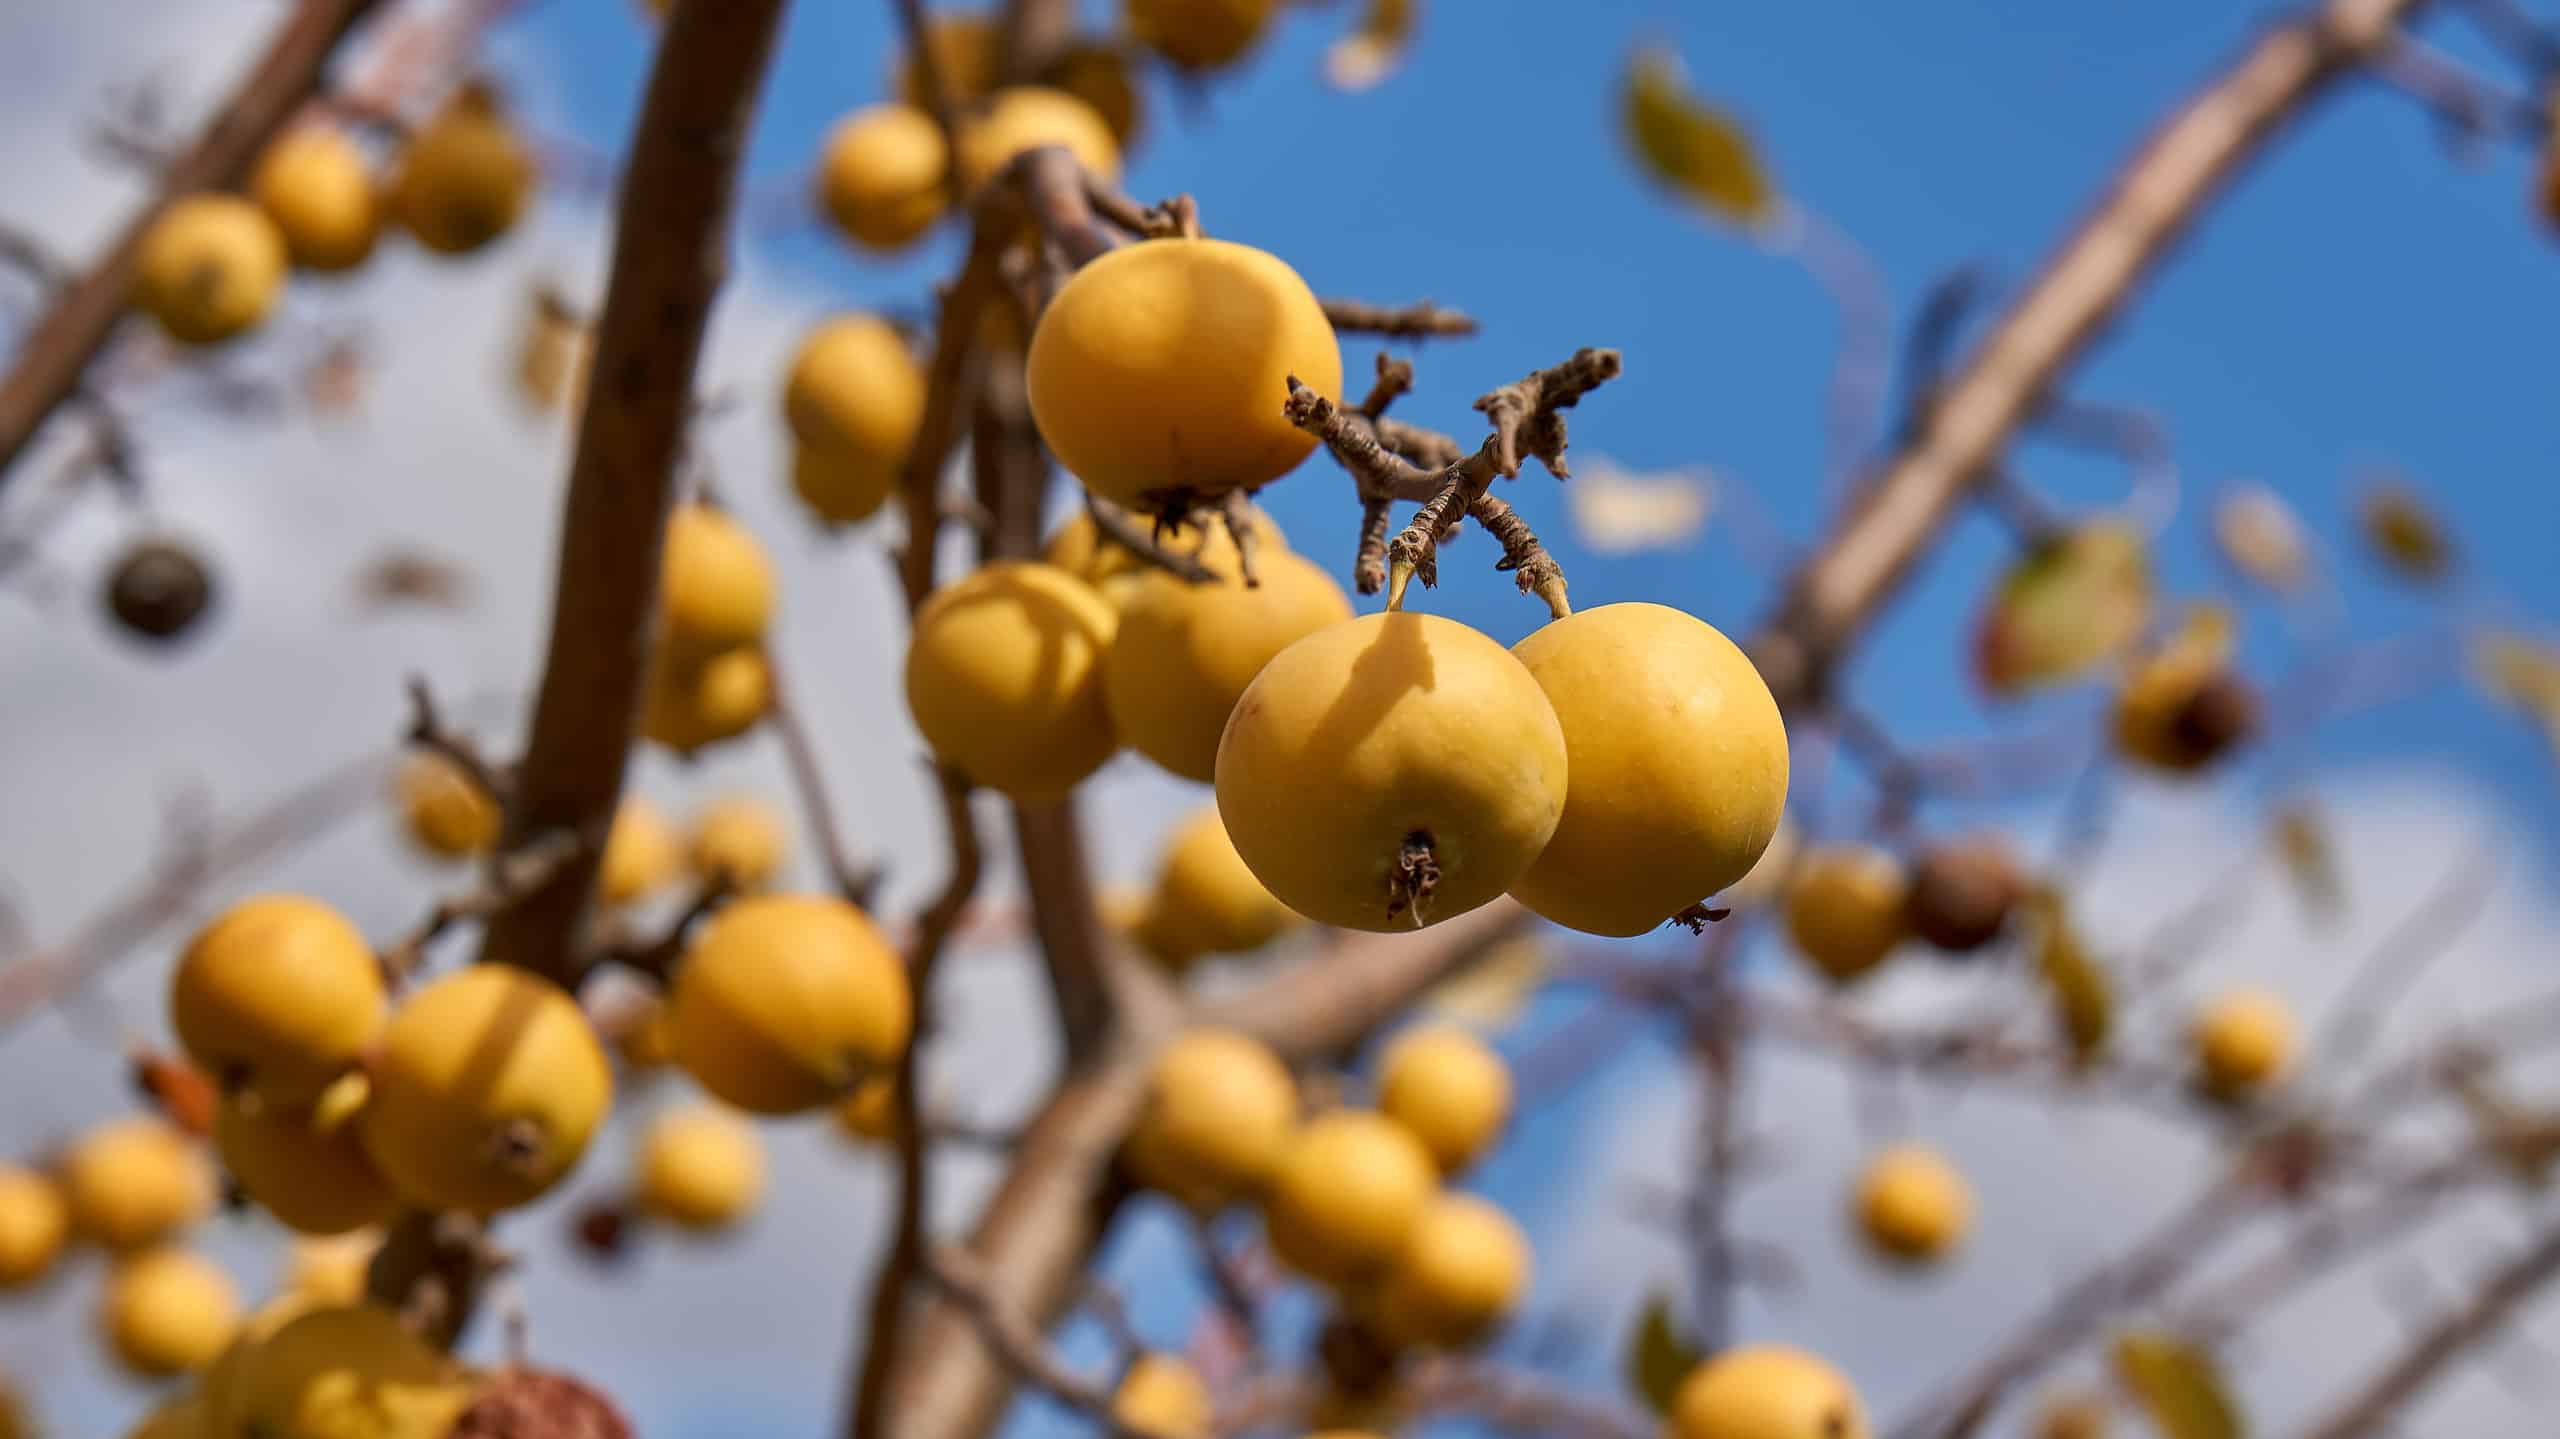 yellow crabapple fruit on tree